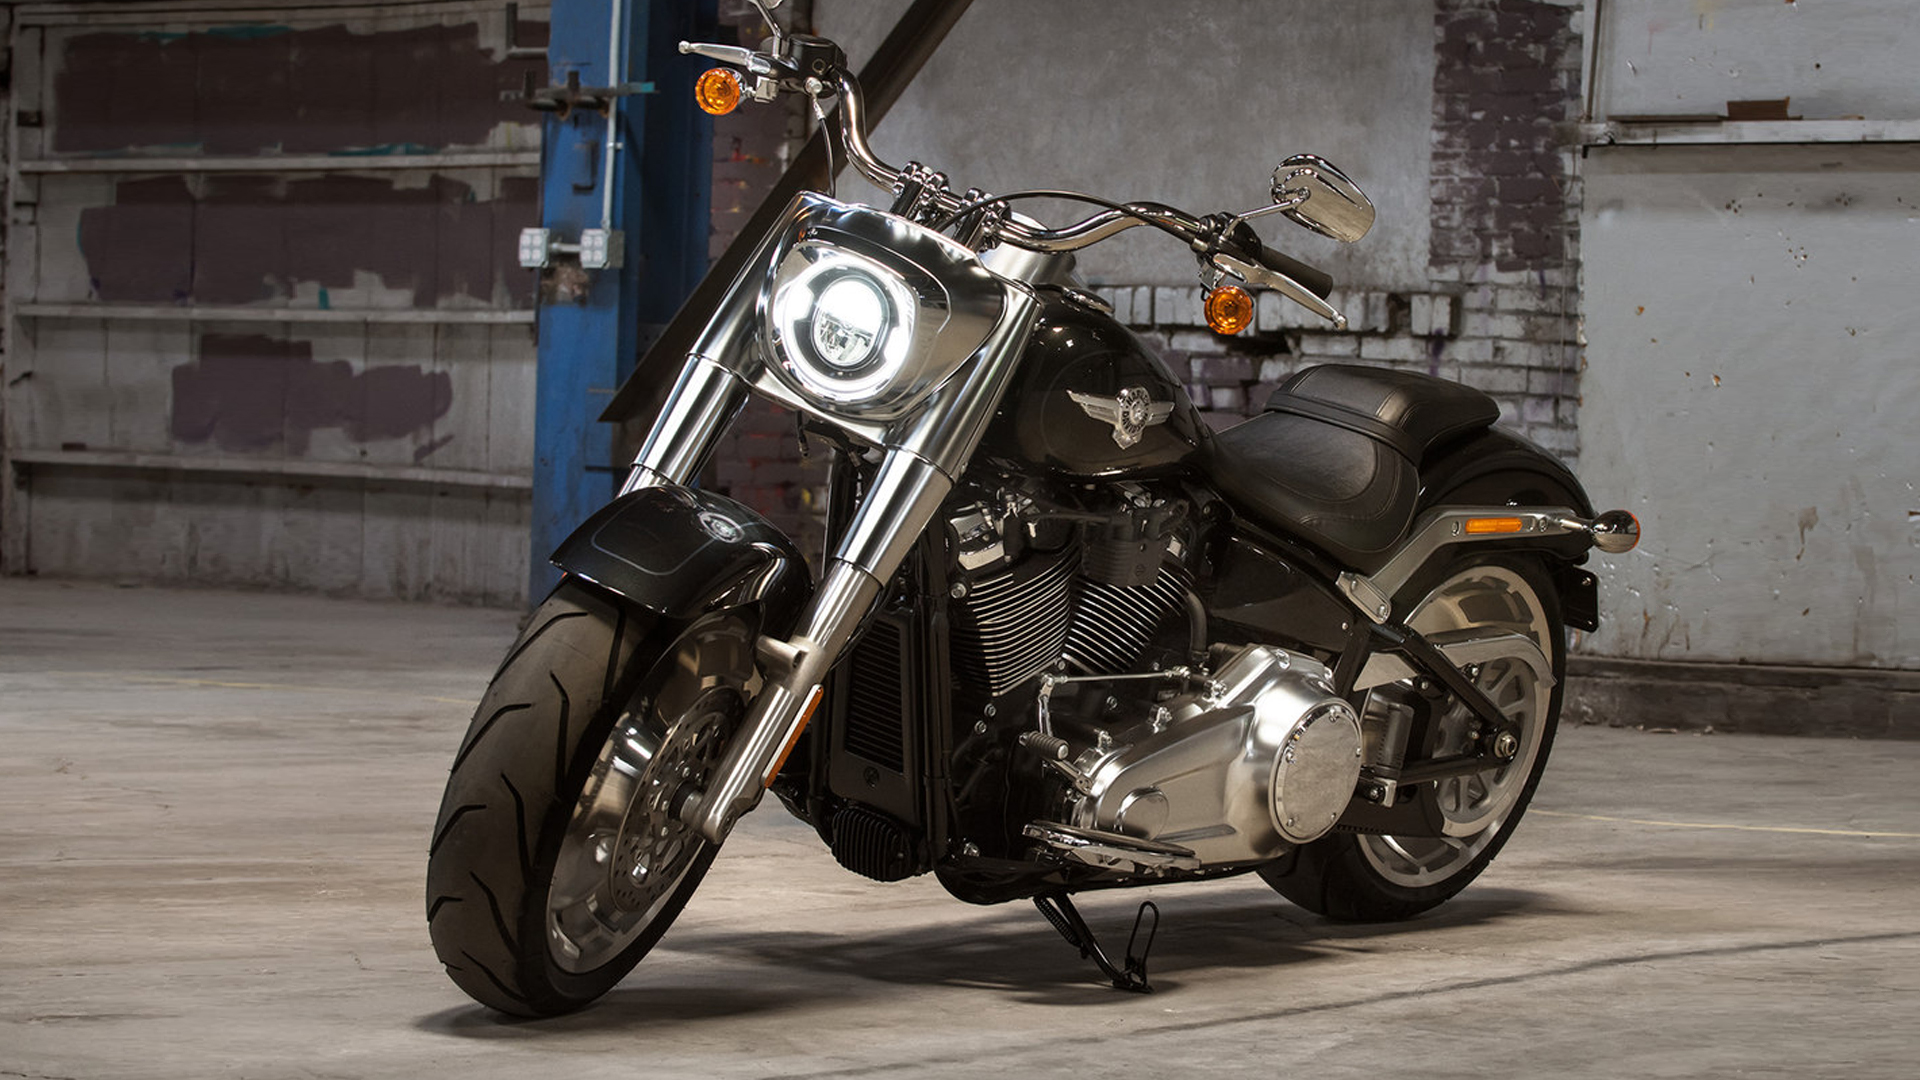 Harley Davidson Motorcycles New Tab Theme